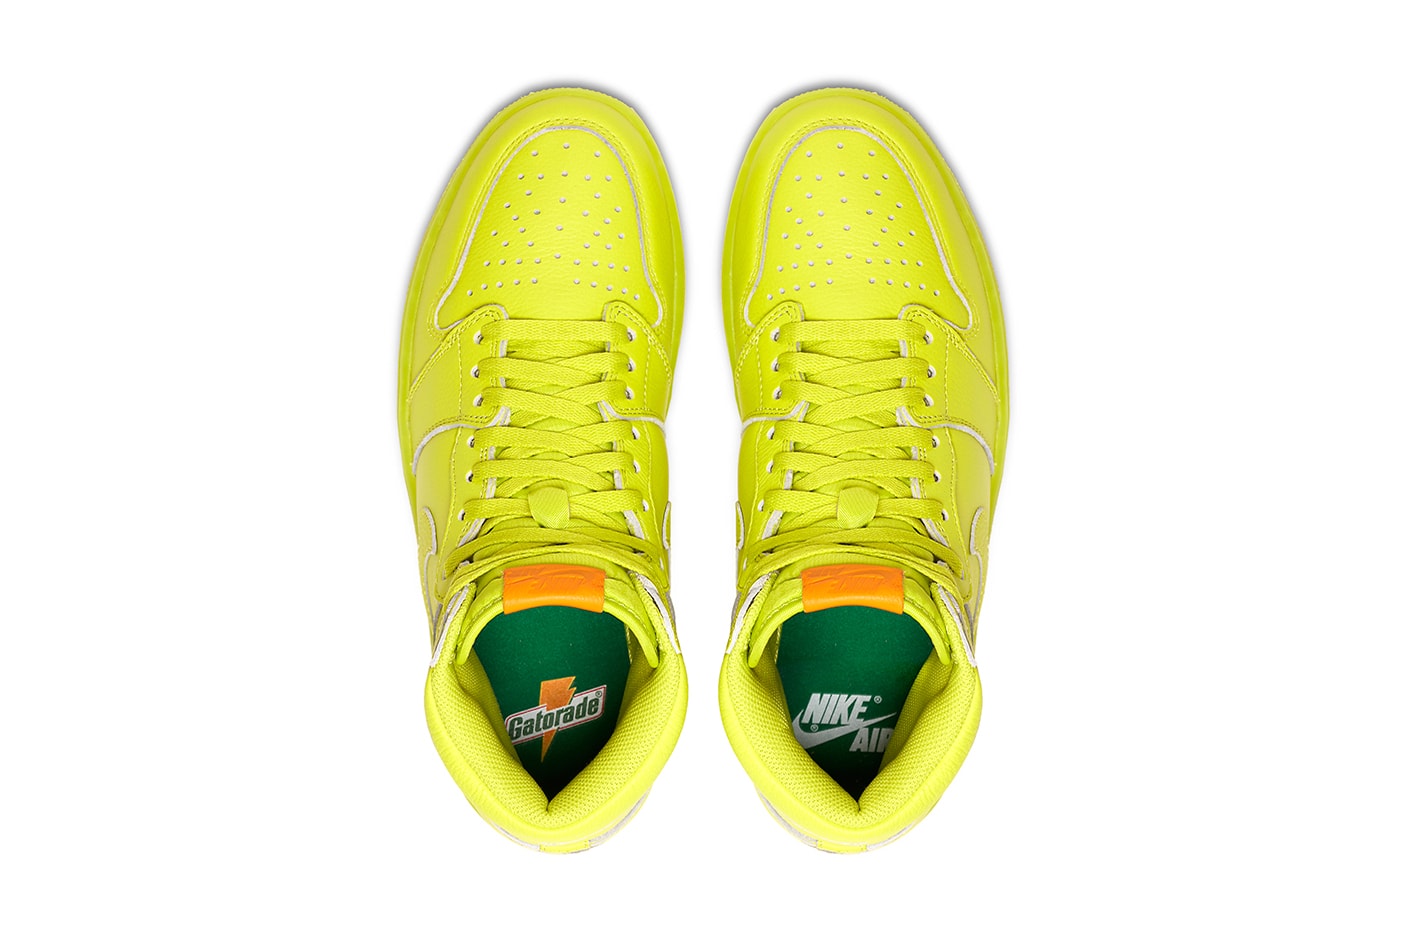 Gatorade Air Jordan 1 Retro High OG G8RD Cyber Lemon Lime 2017 December 26 Release Date Info Sneakers Shoes Footwear